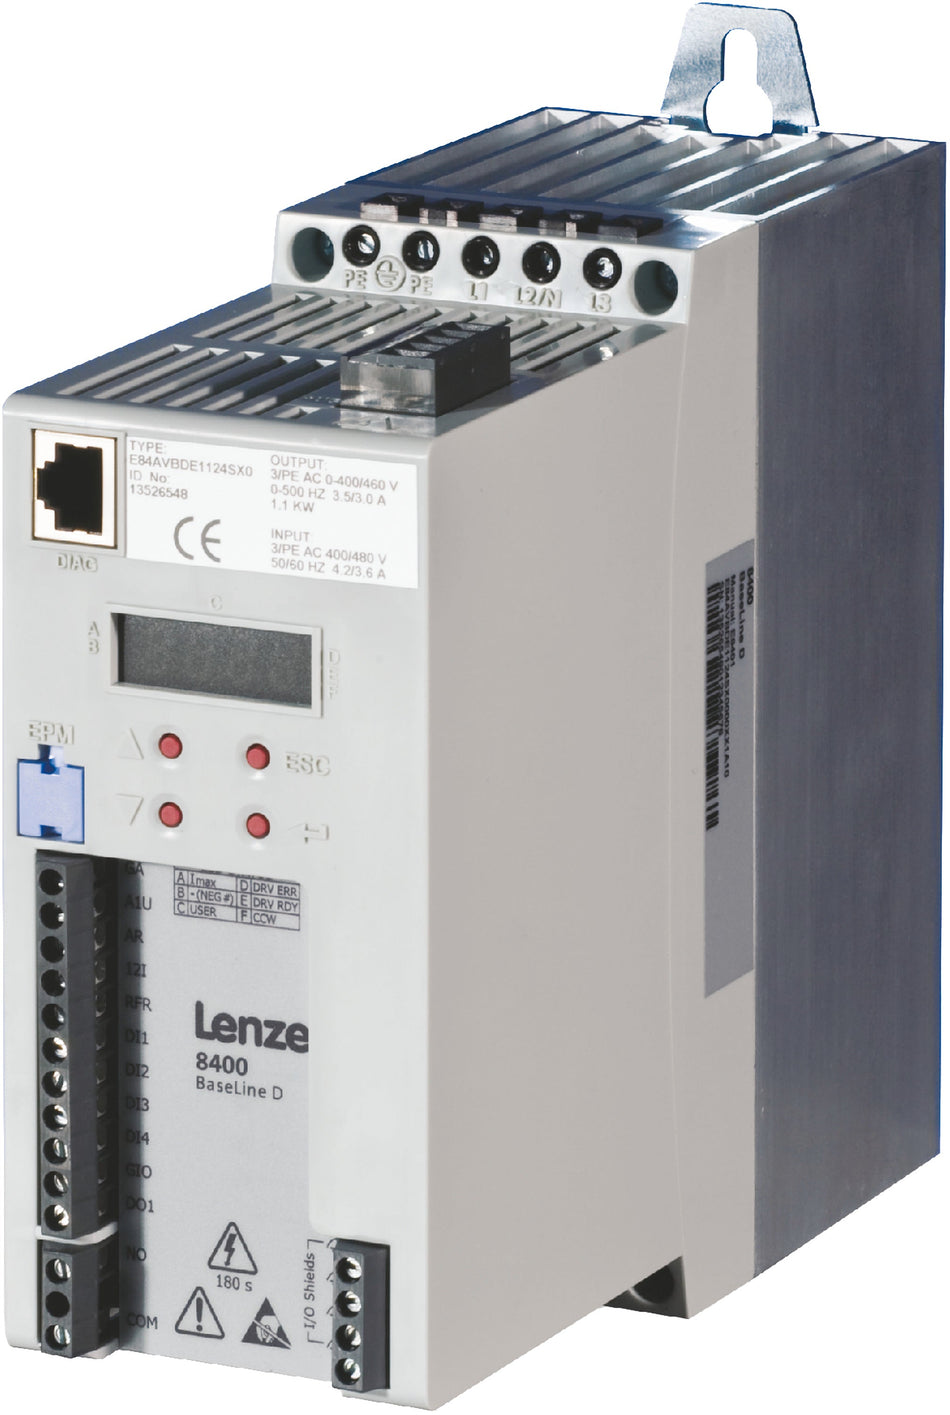 Lenze Inverter Drives 8400 BaseLine - E84AVBCE1524SX0XX3A34 1.5 kW